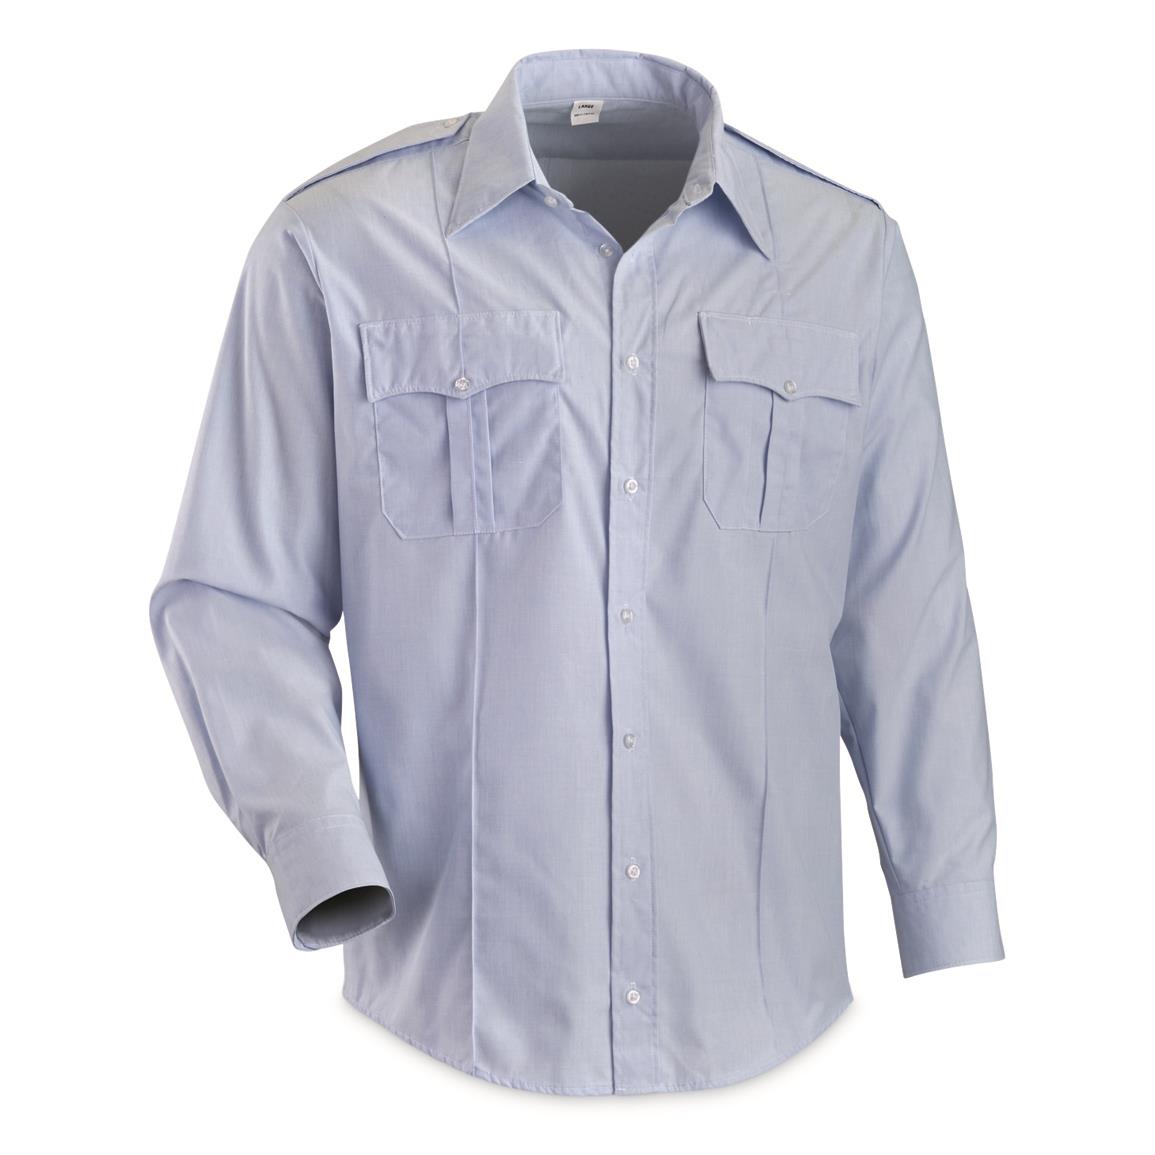 U.S. Police Surplus Long Sleeve Duty Shirts, 3 Pack, New, Light Blue